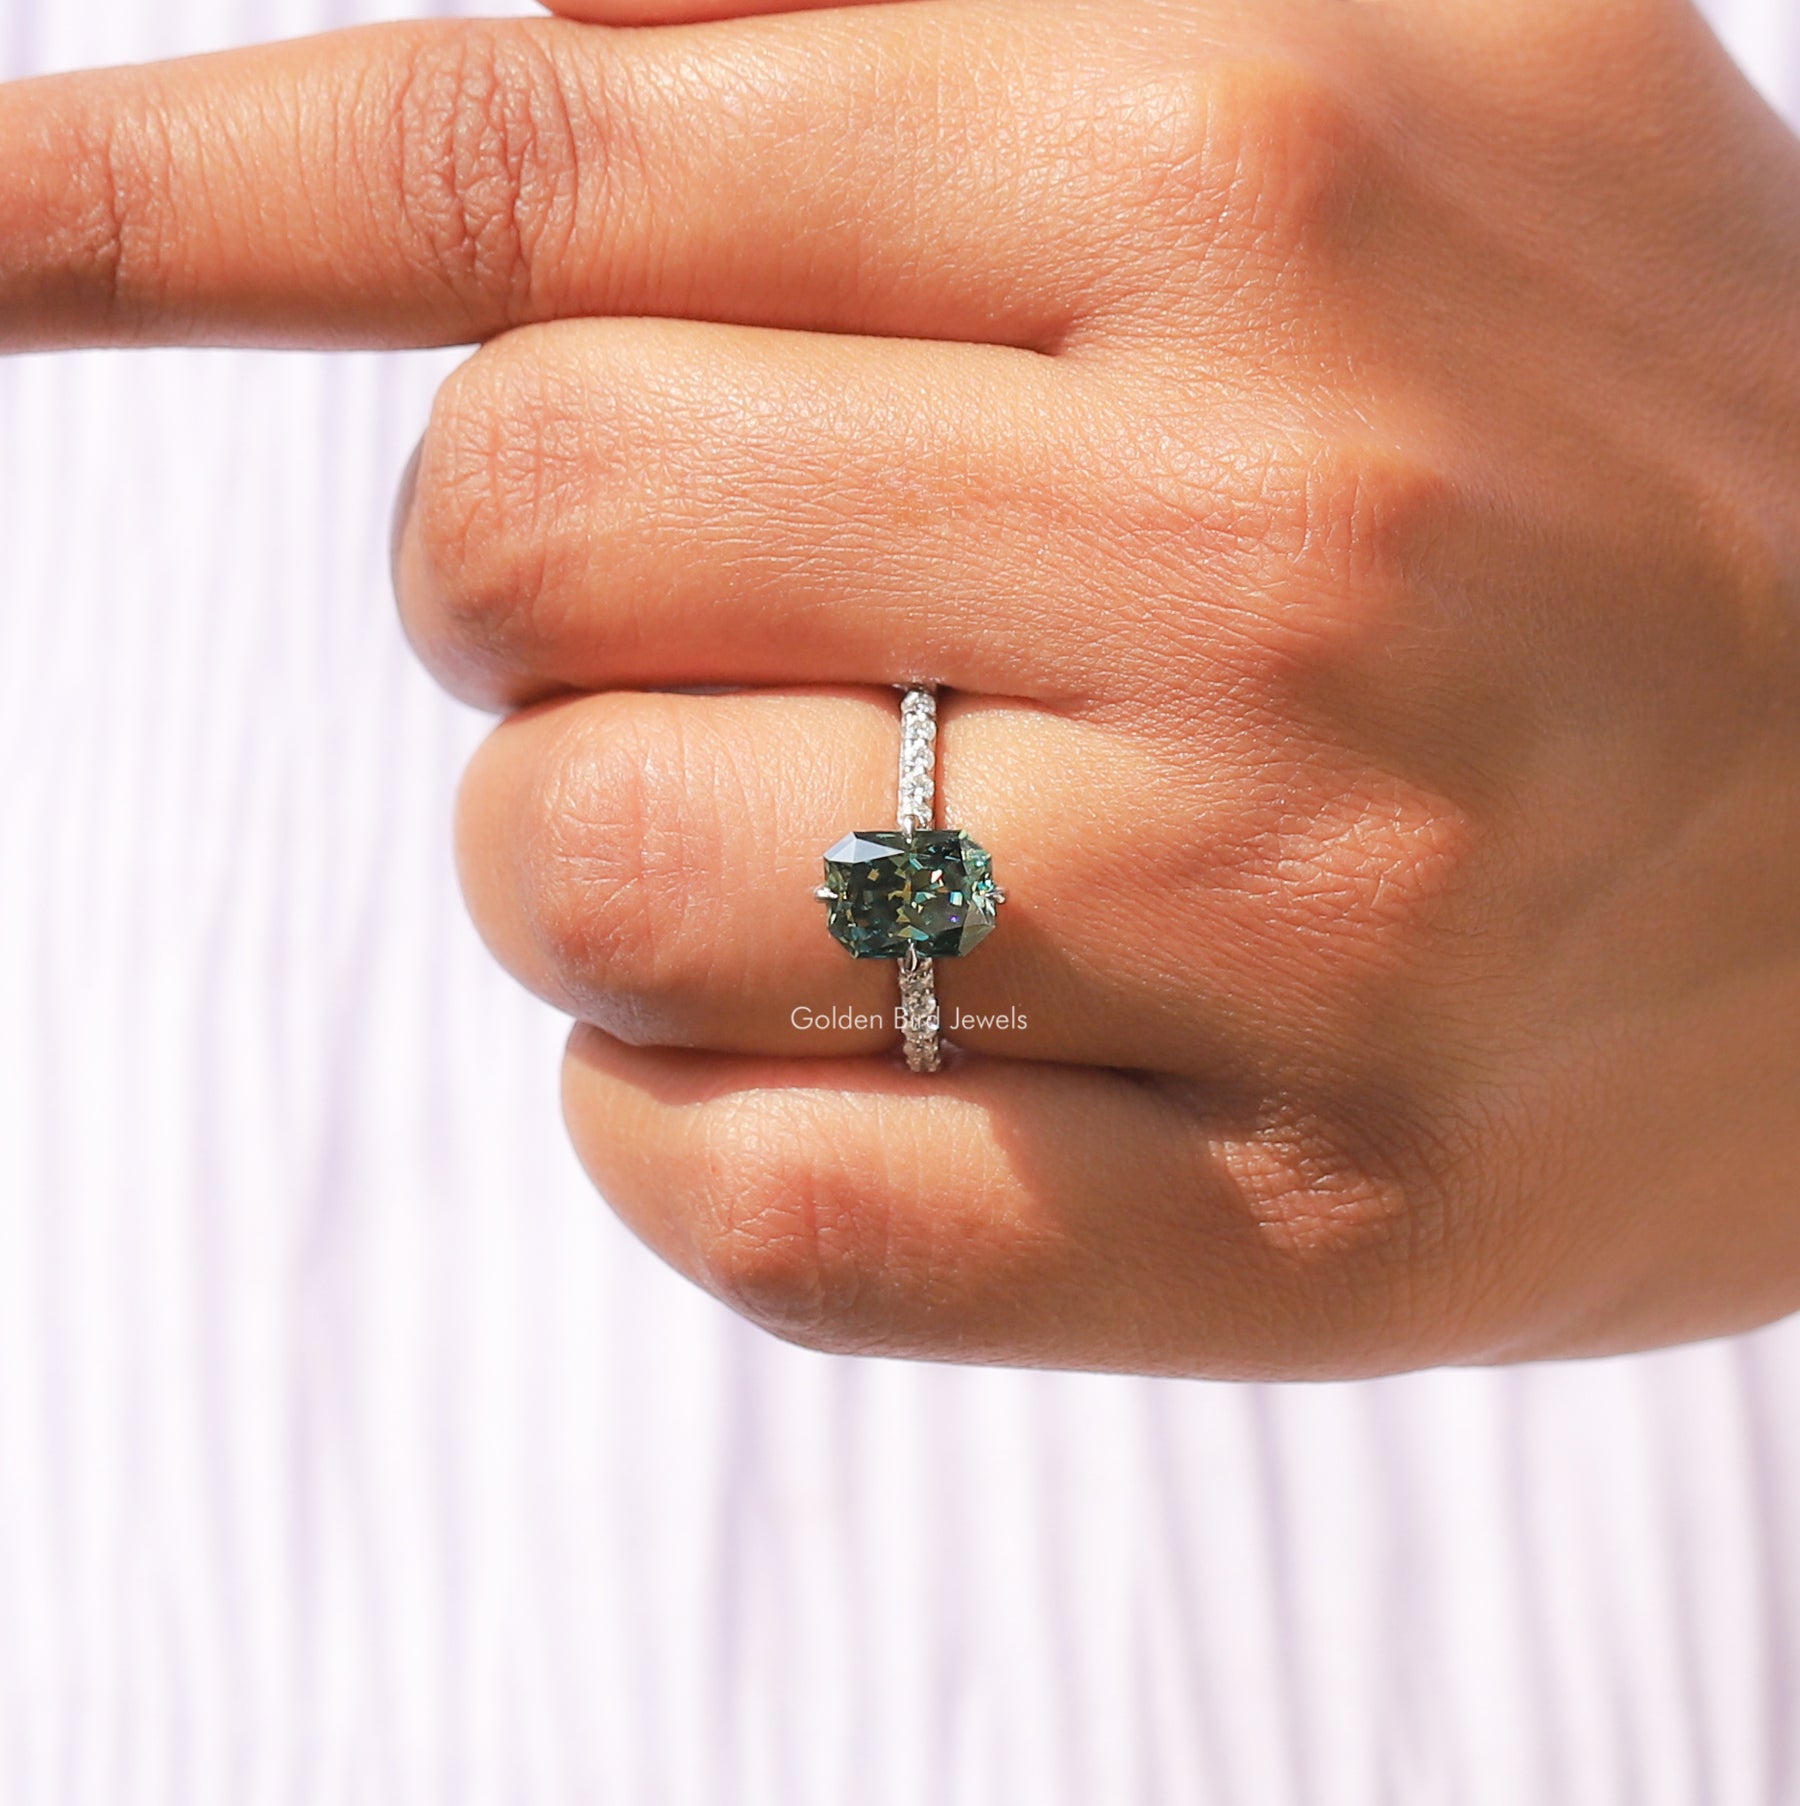 [In finger front view of moissanite green radiant cut moissanite ring]-[Golden Bird Jewels]